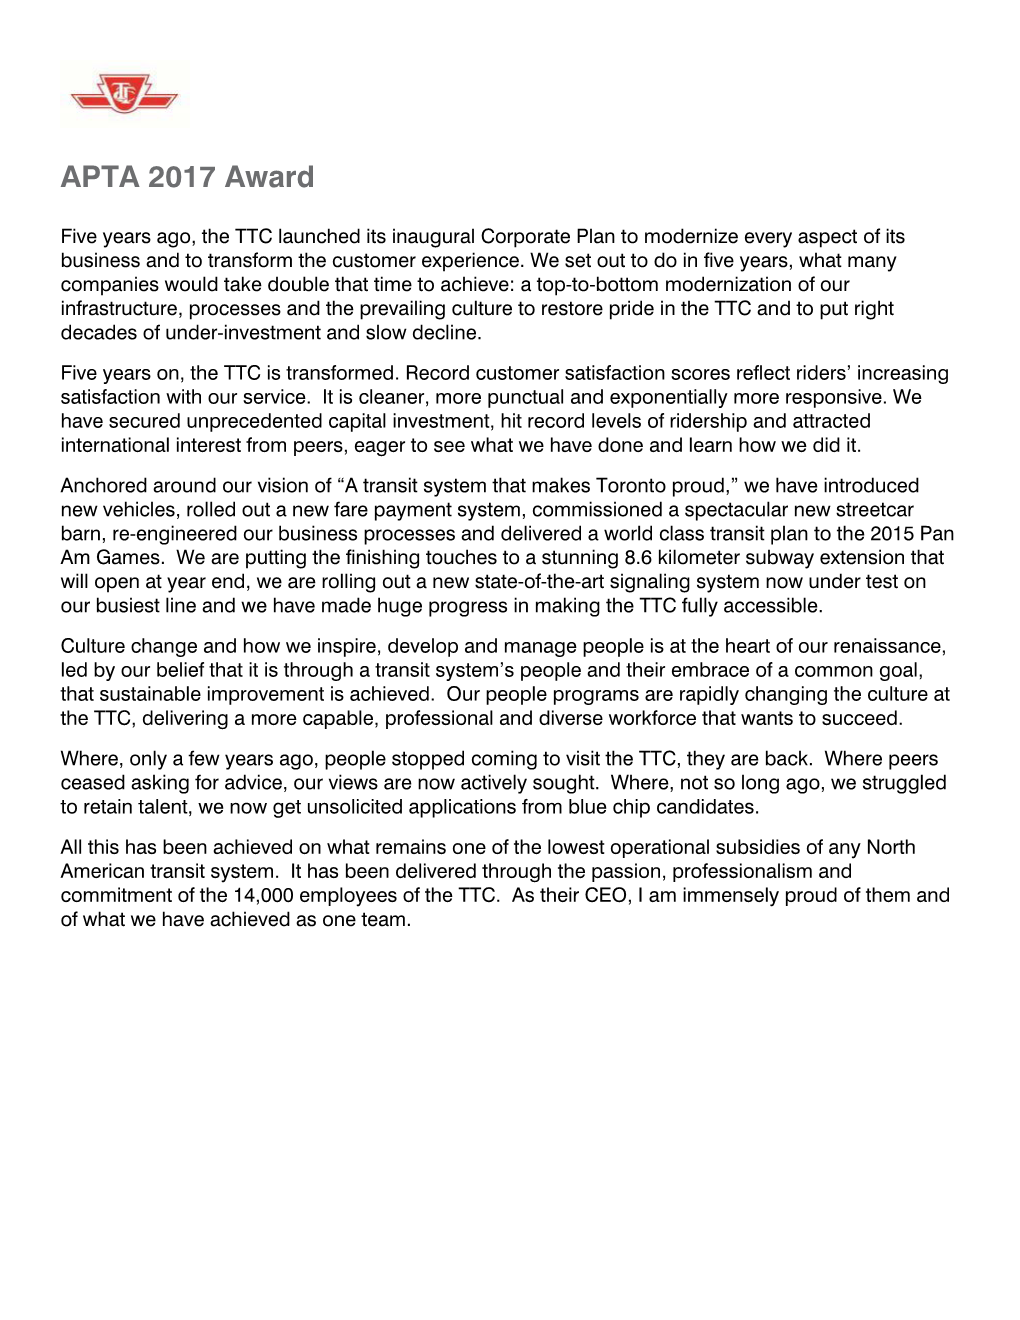 APTA 2017 Award Submission